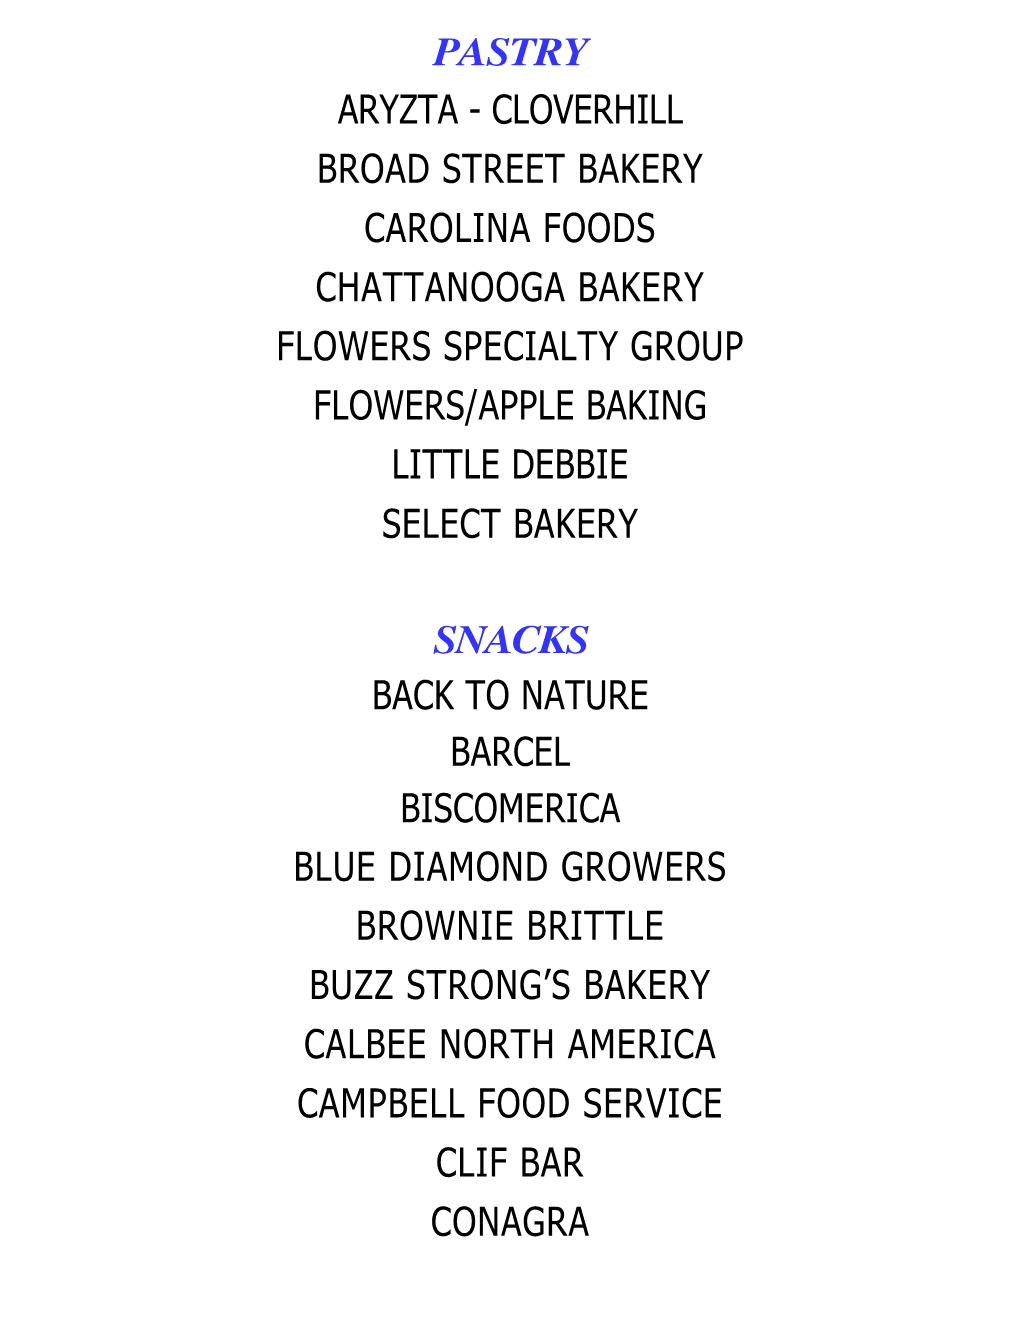 Pastry Aryzta - Cloverhill Broad Street Bakery Carolina Foods Chattanooga Bakery Flowers Specialty Group Flowers/Apple Baking Little Debbie Select Bakery